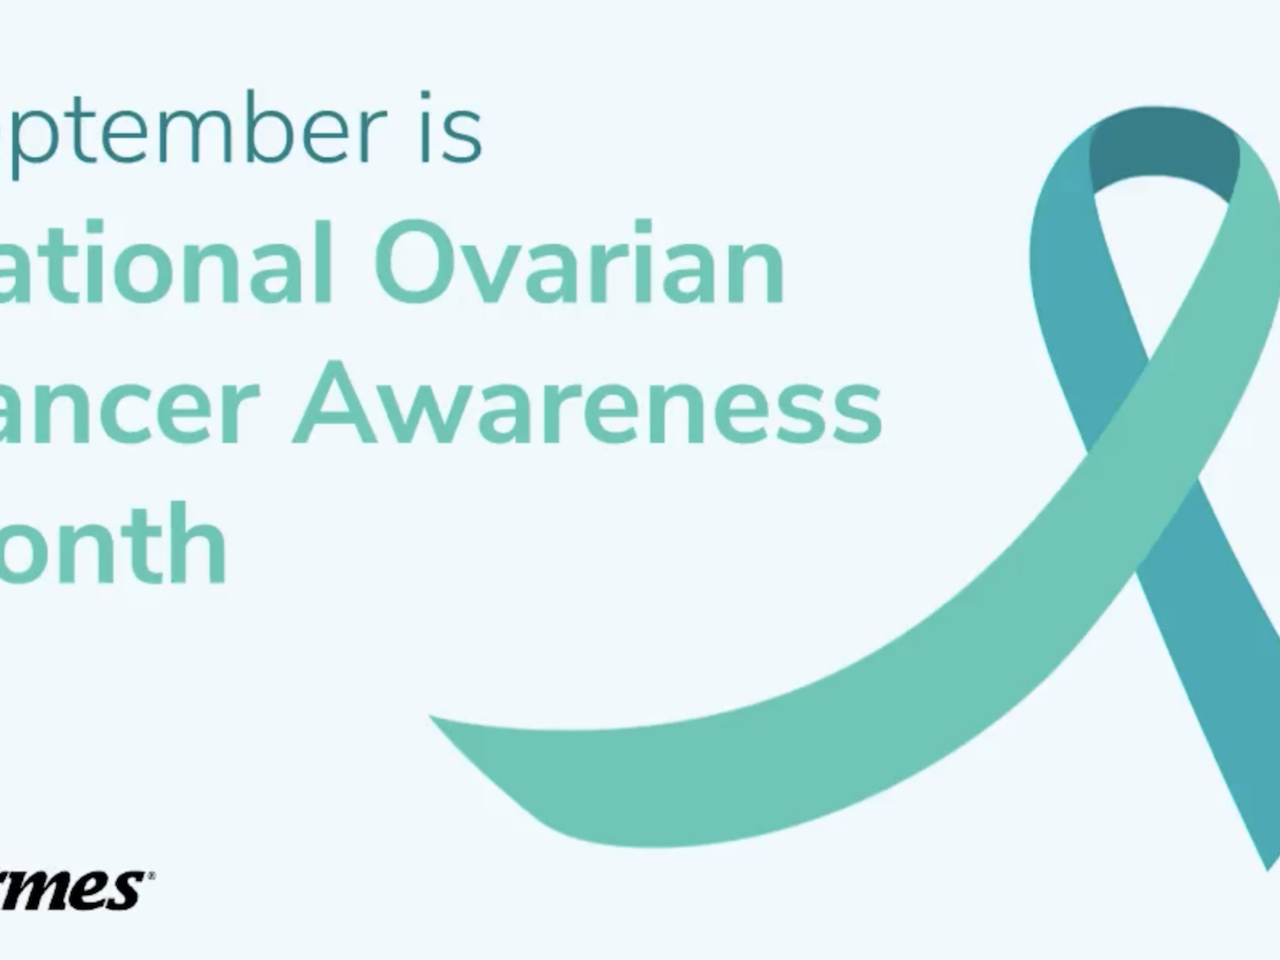 "September is Ovarian Cancer Awareness Month"